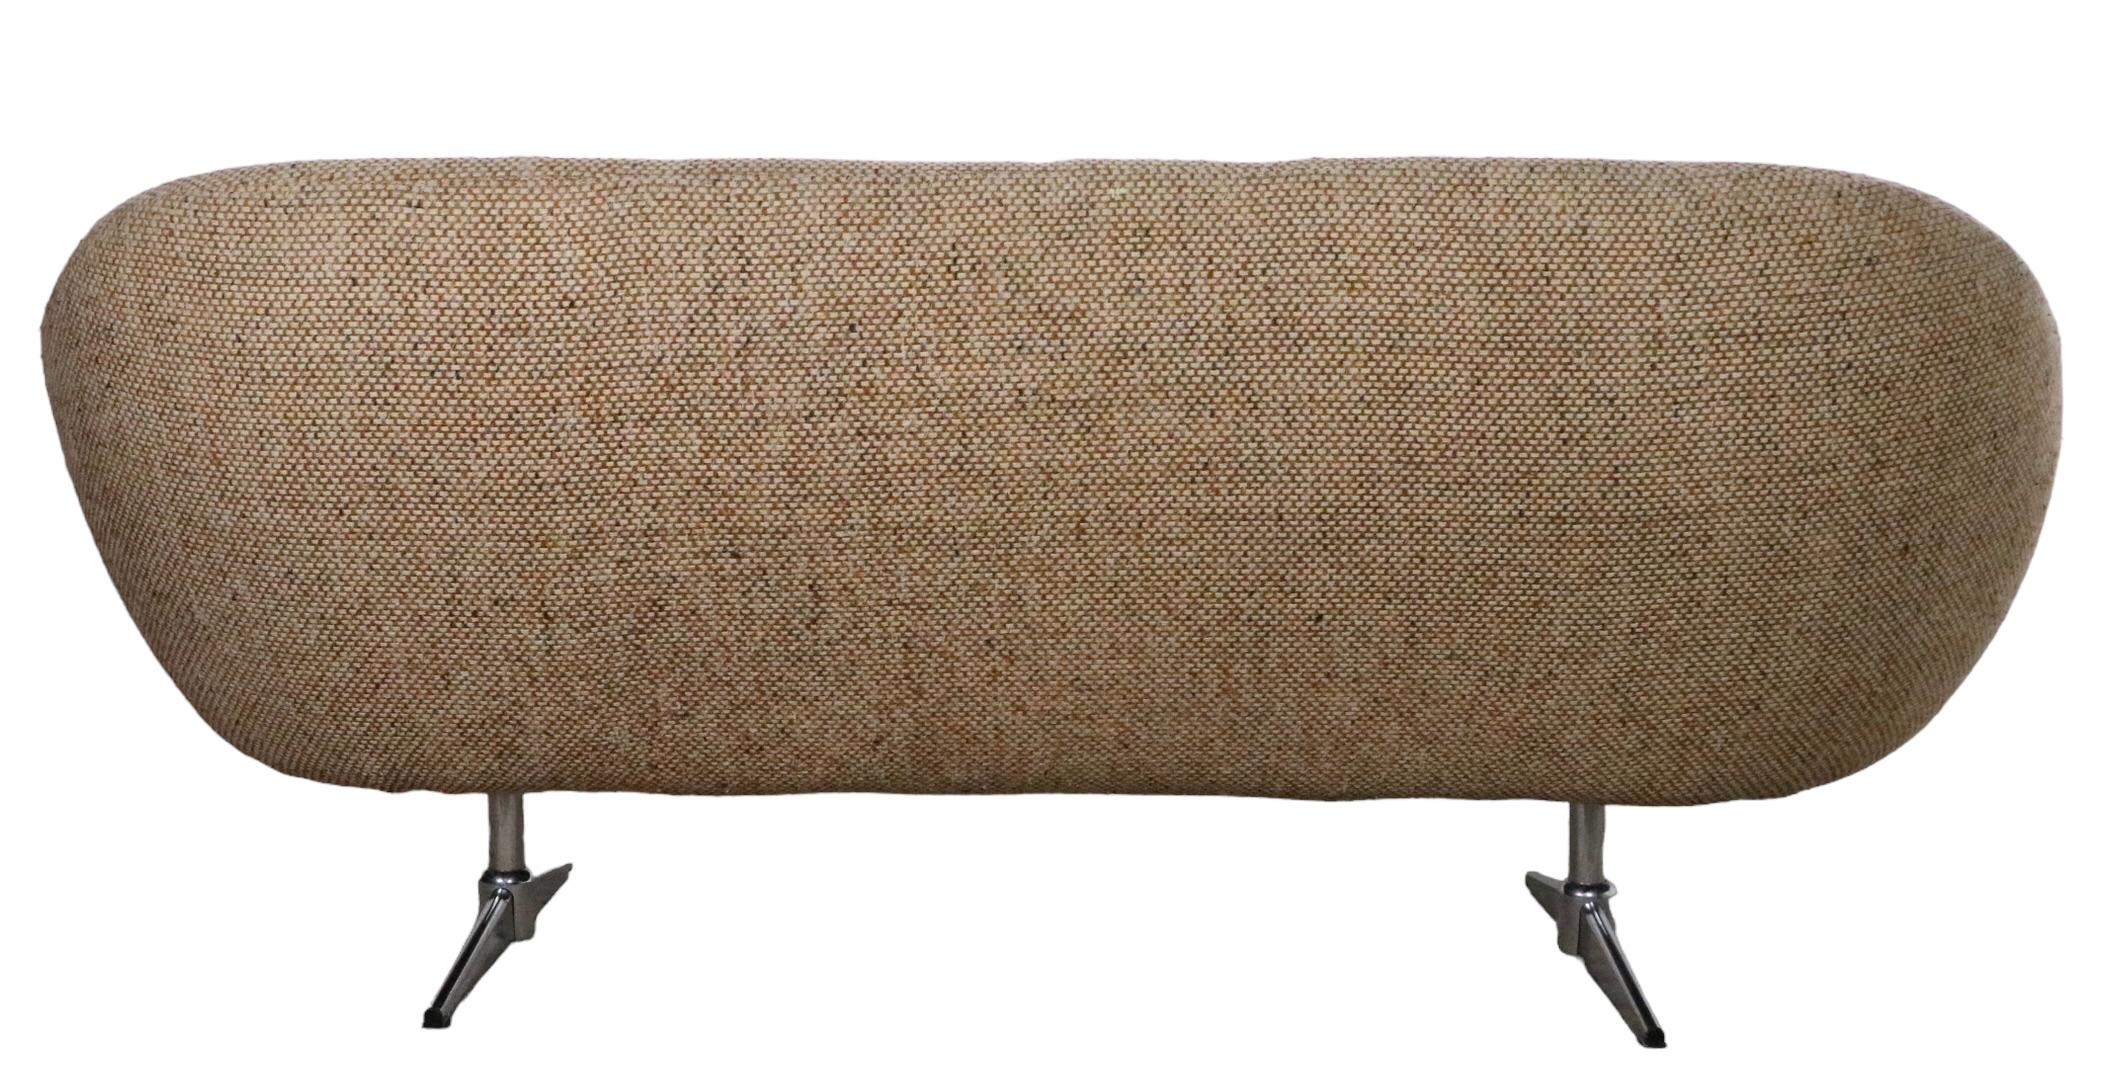 20th Century Mod Pod Sofa by Overman in Original Tweed Fabric, circa 1960s - 1970s